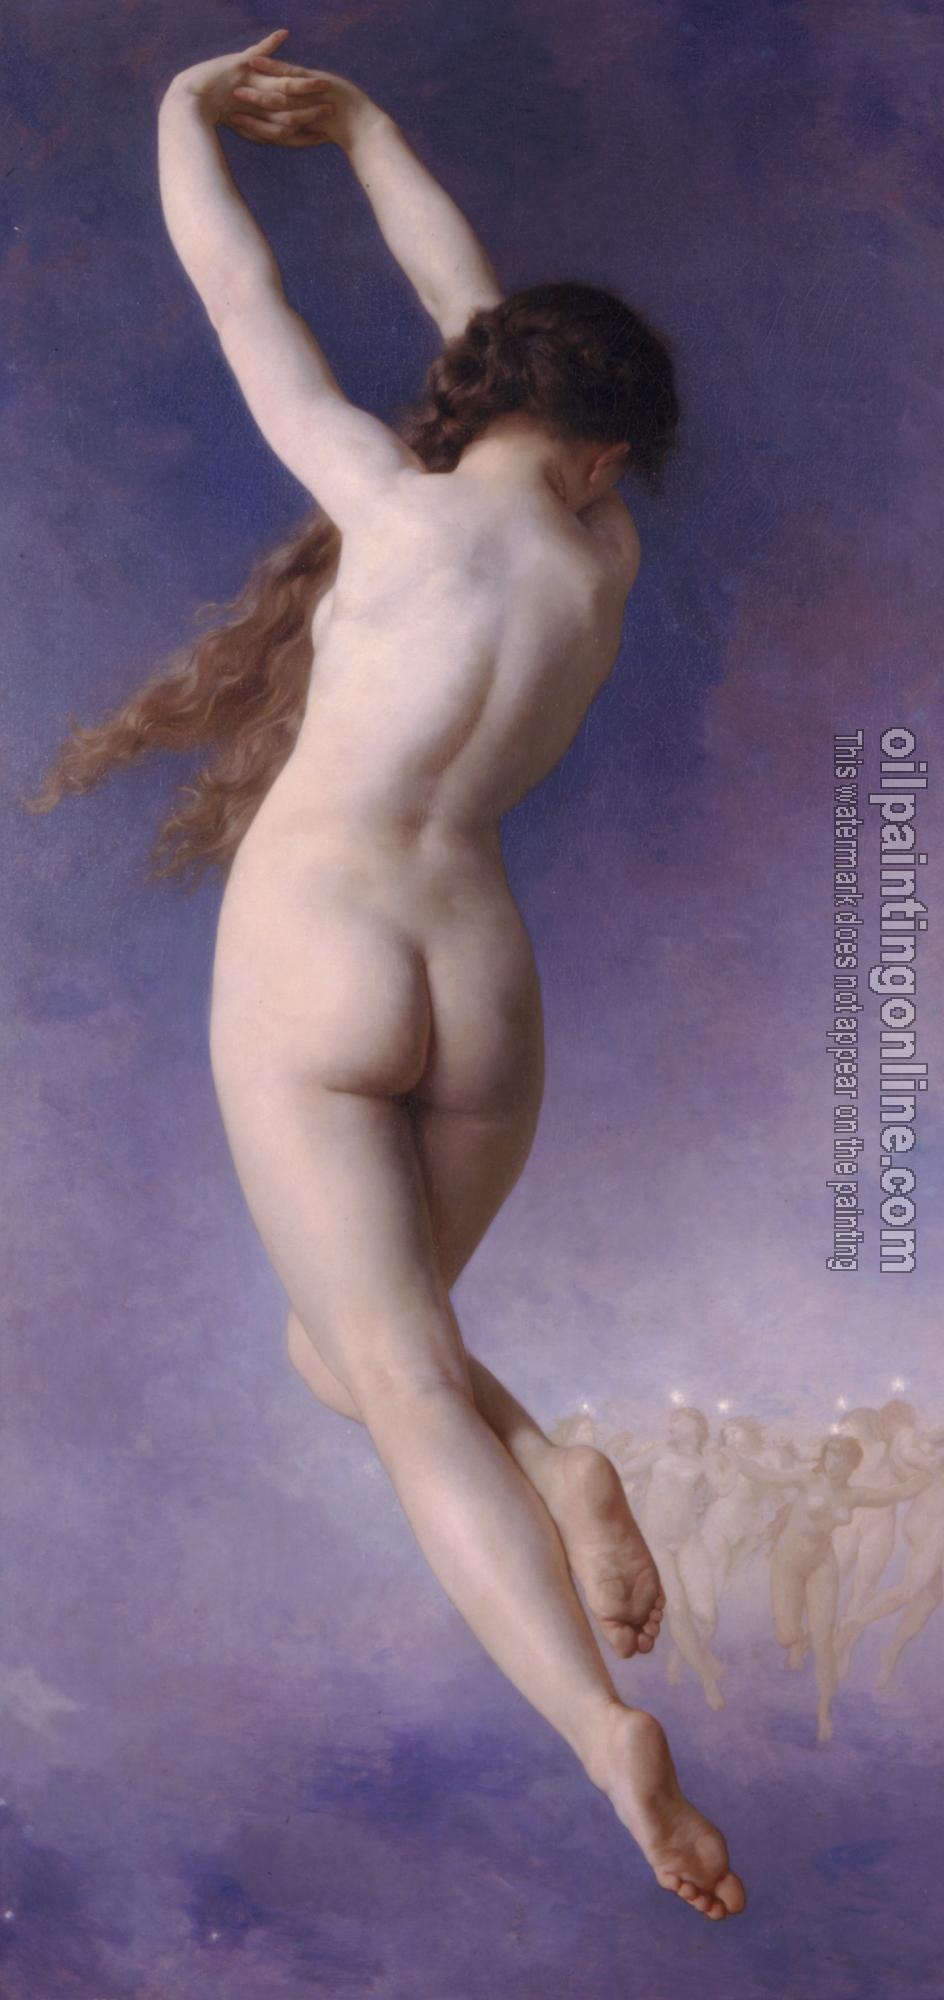 Bouguereau, William-Adolphe - The Lost Pleiad